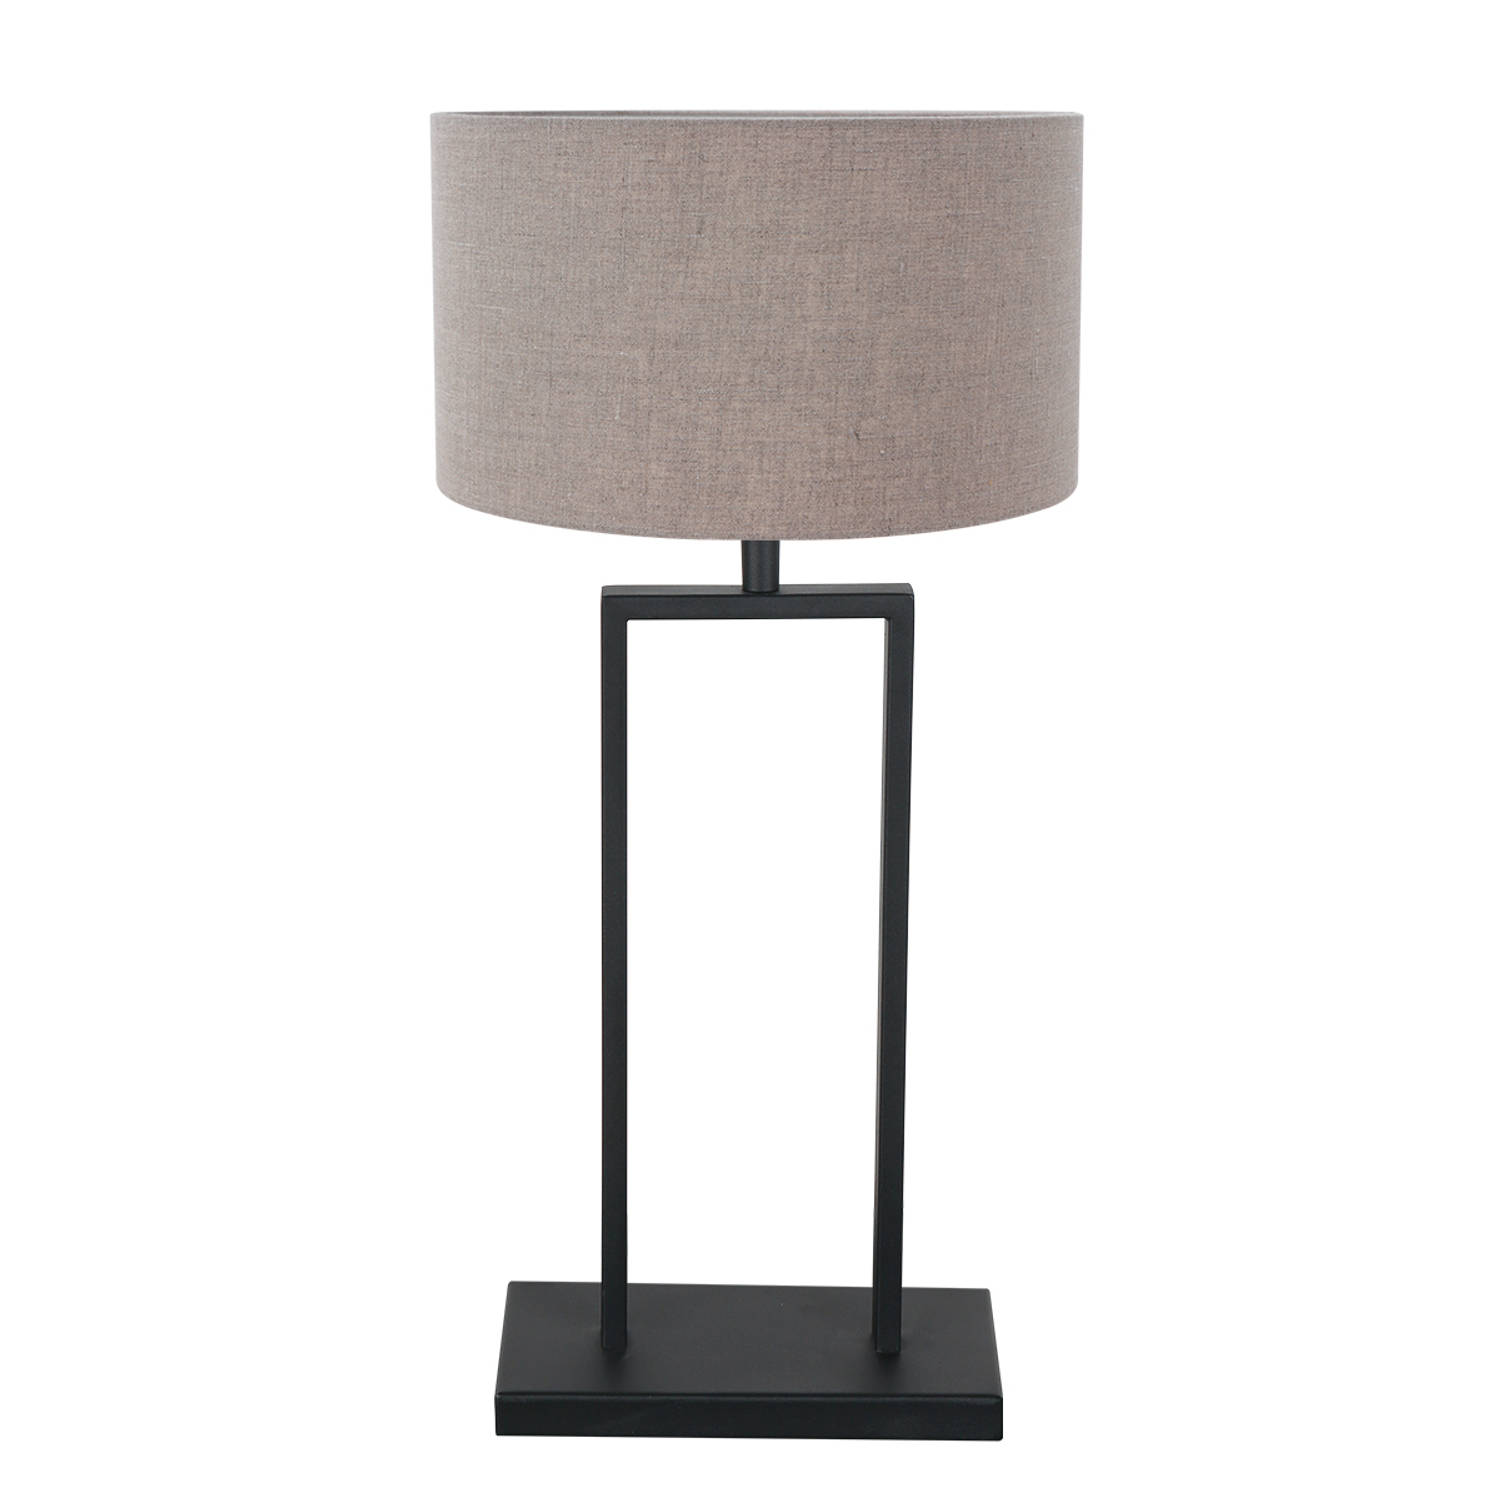 Tafellamp Stang in grijs/zwart | 1-lichts | E27 fitting | modern design | woonkamer / slaapkamer | industriële look